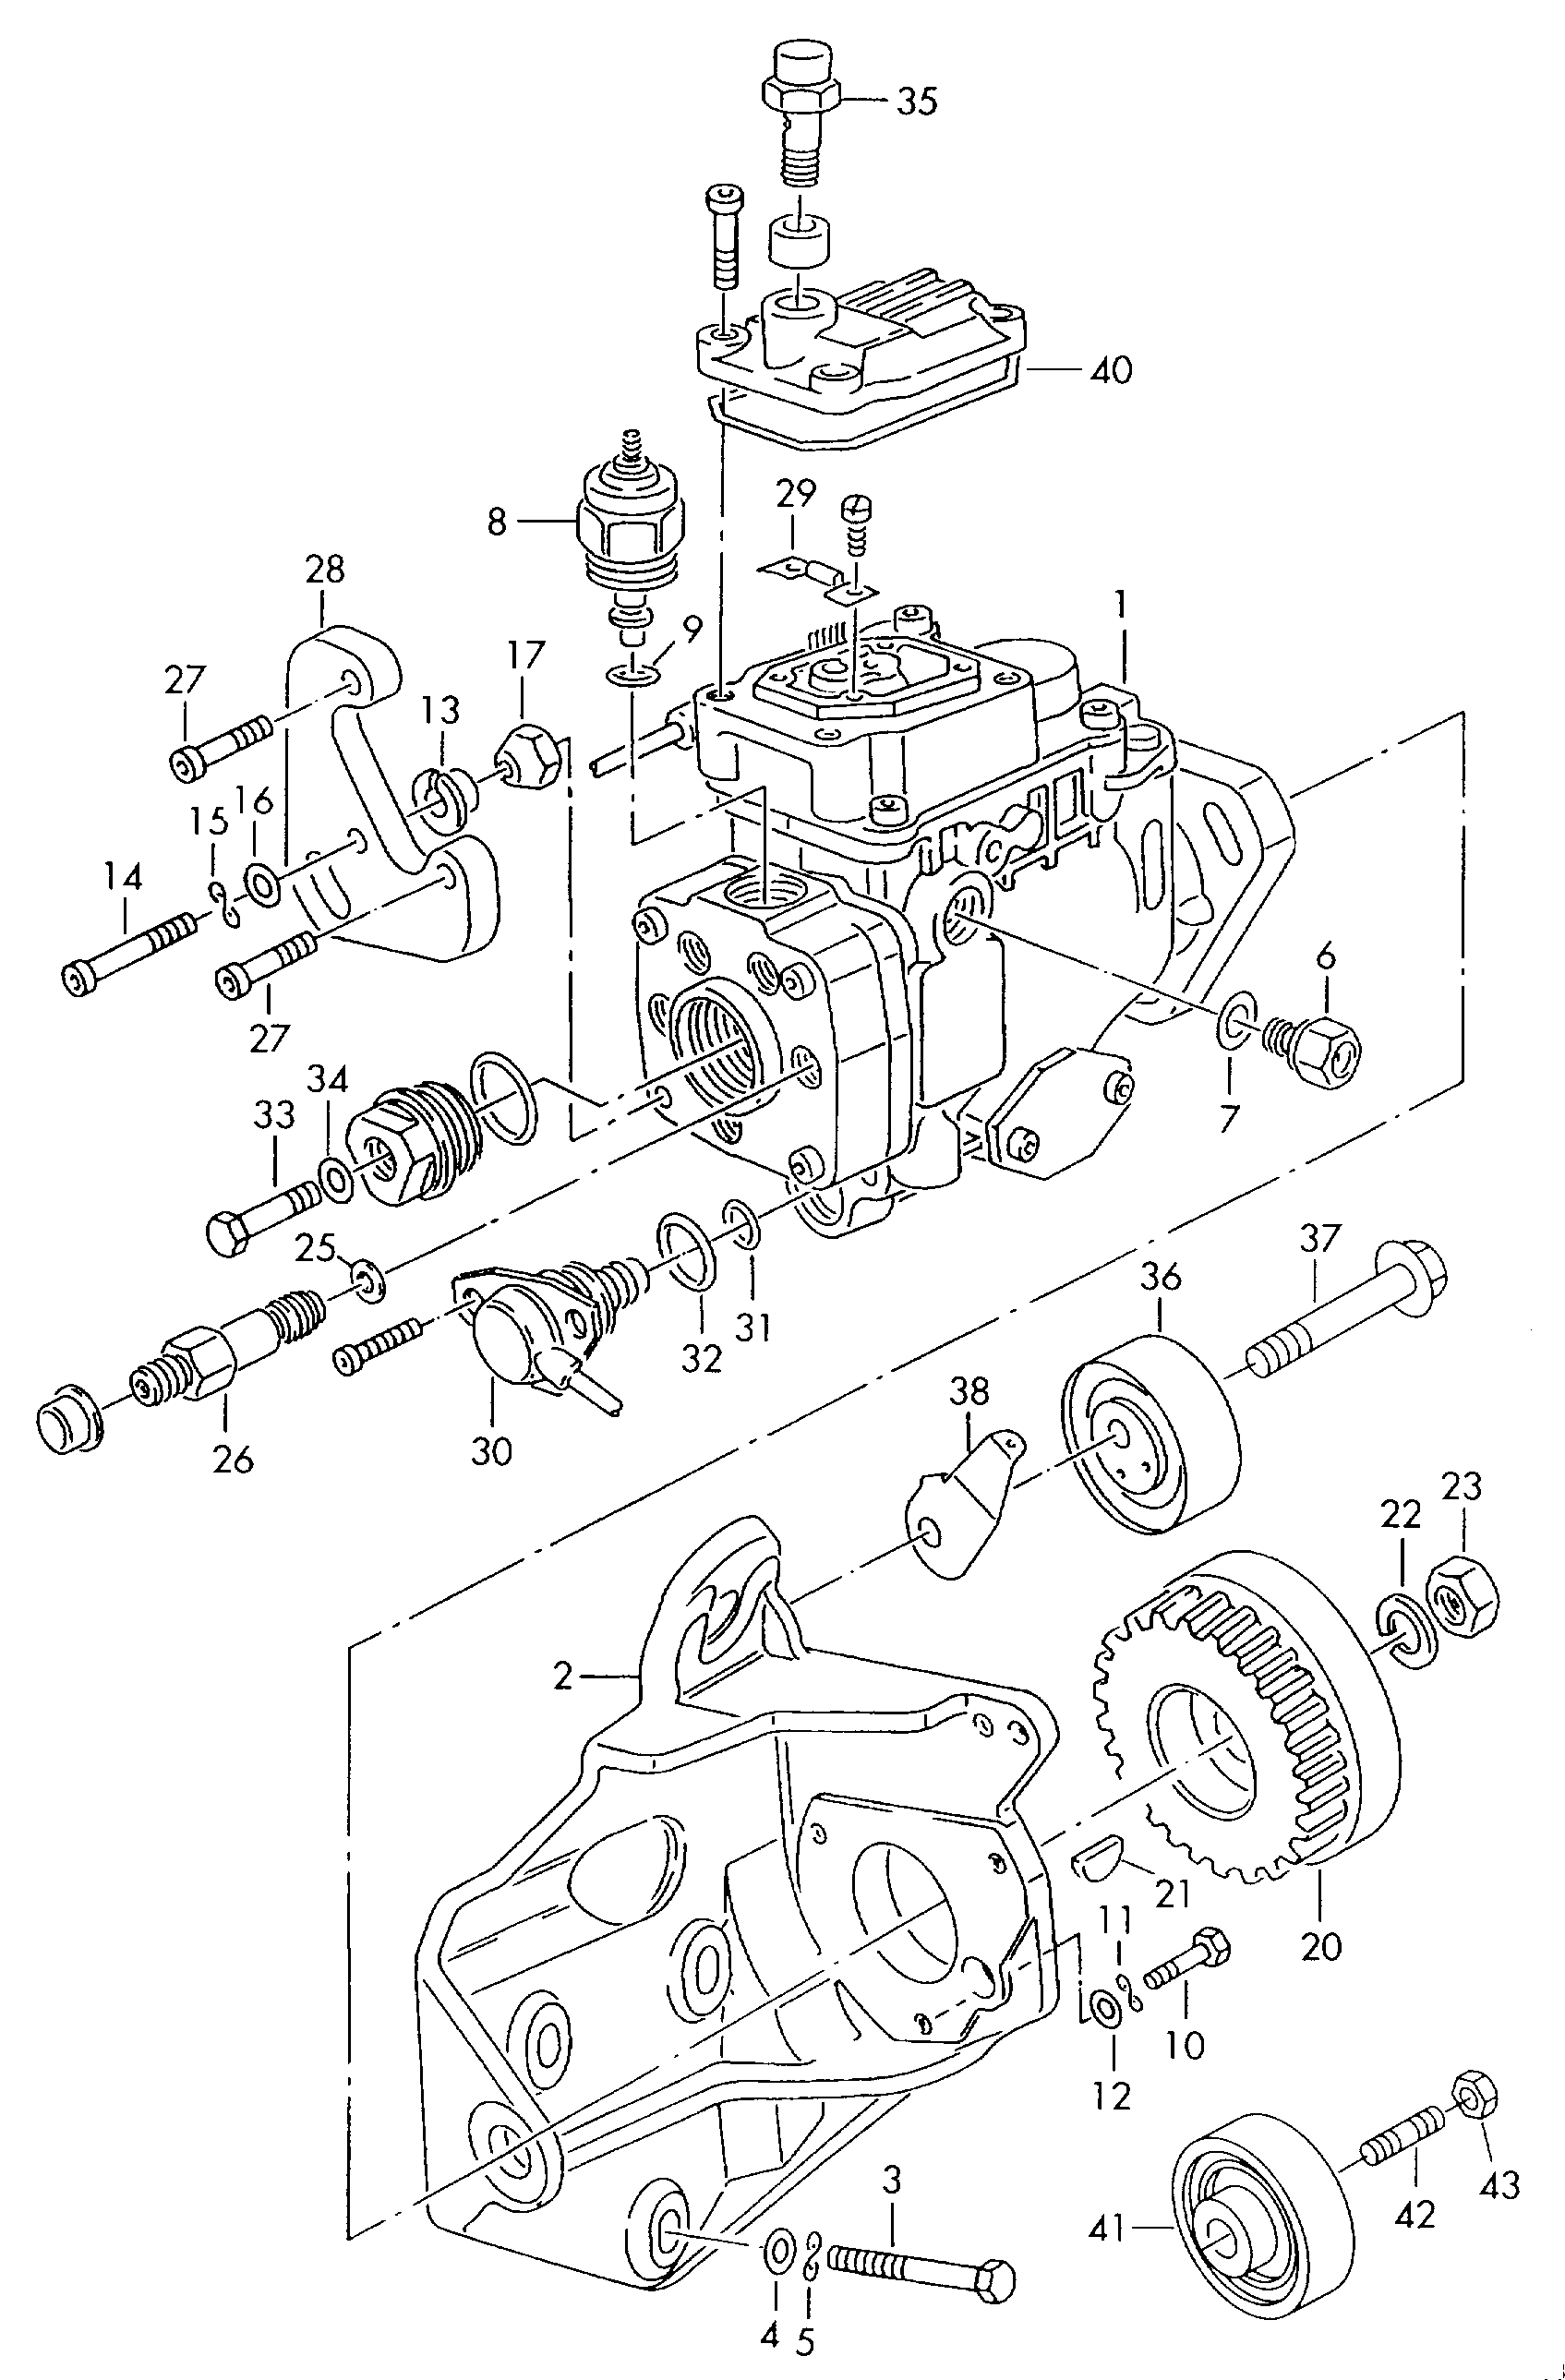 Pompe dinjection 2,5l - Transporter syncro - trsy